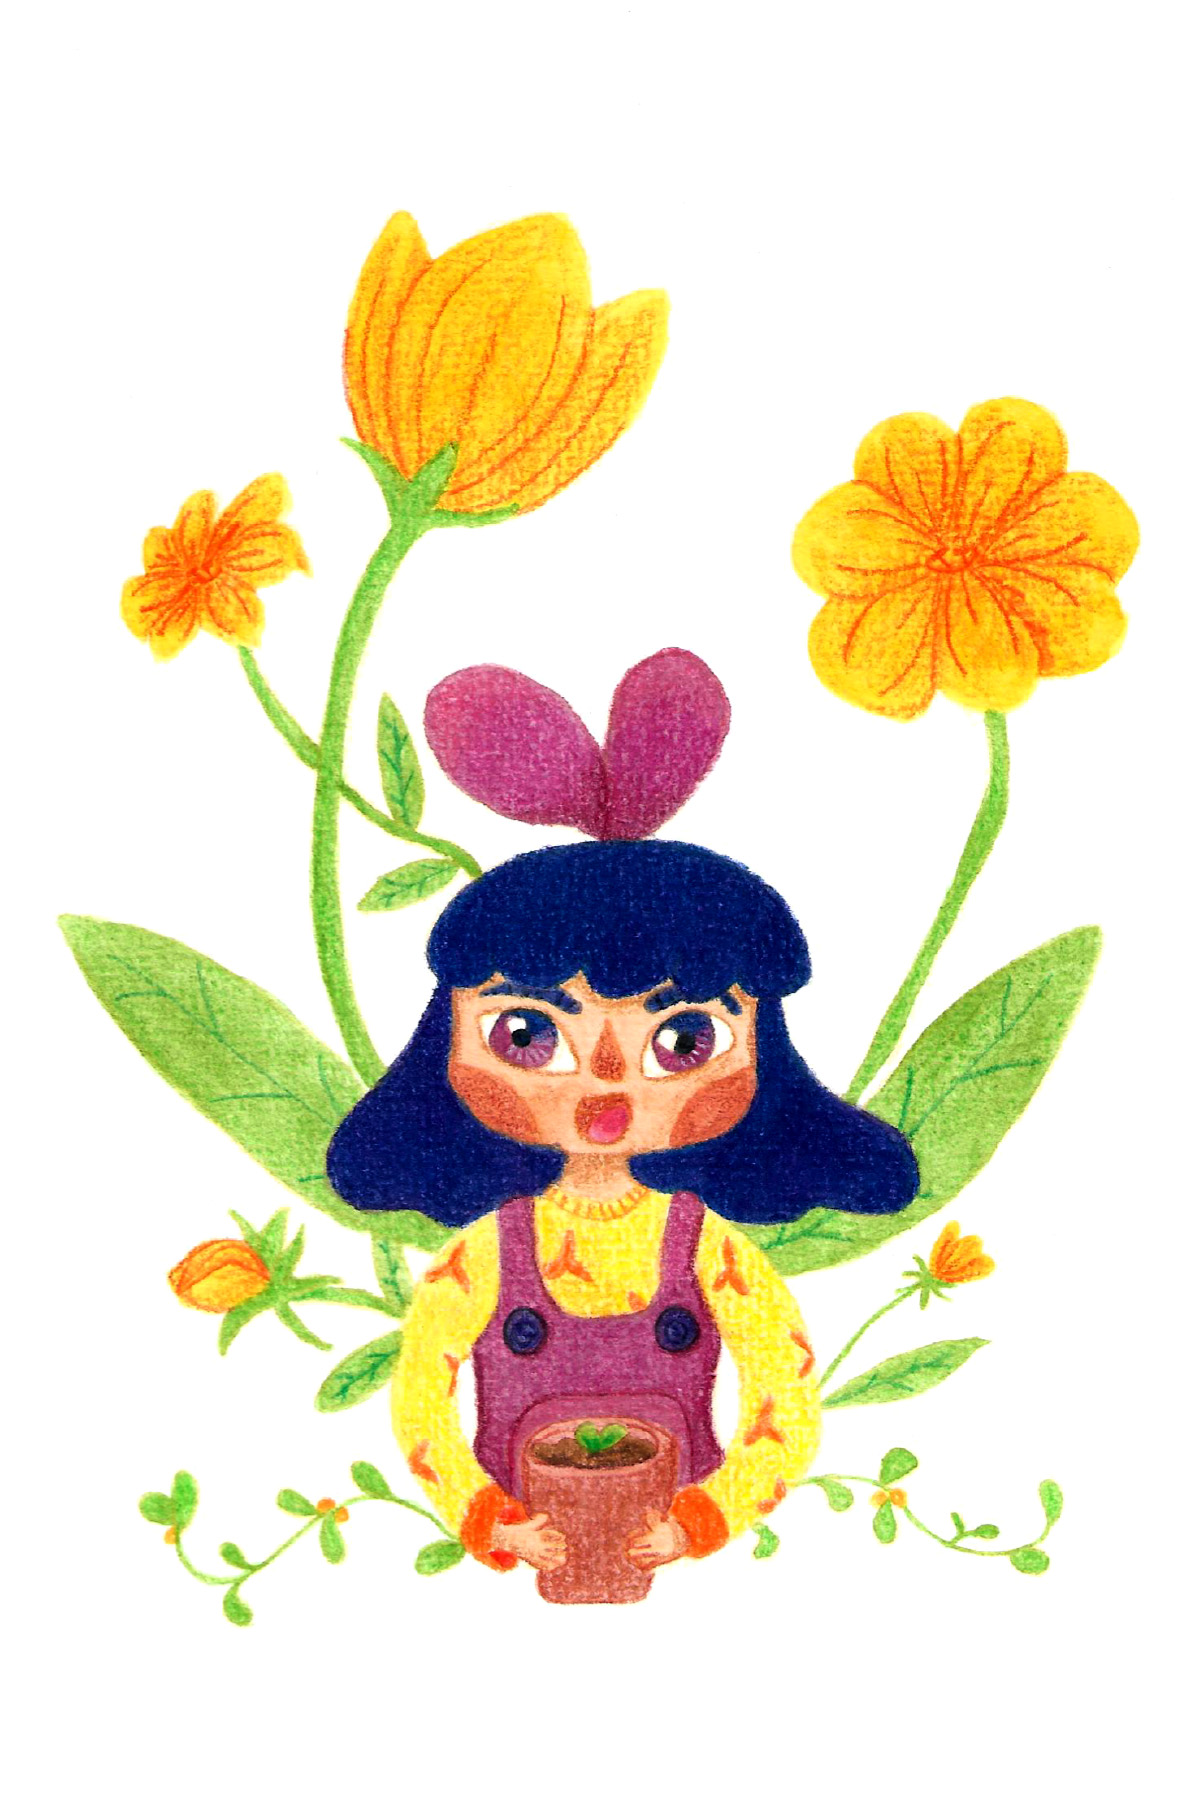 La petite fille dans son jardin